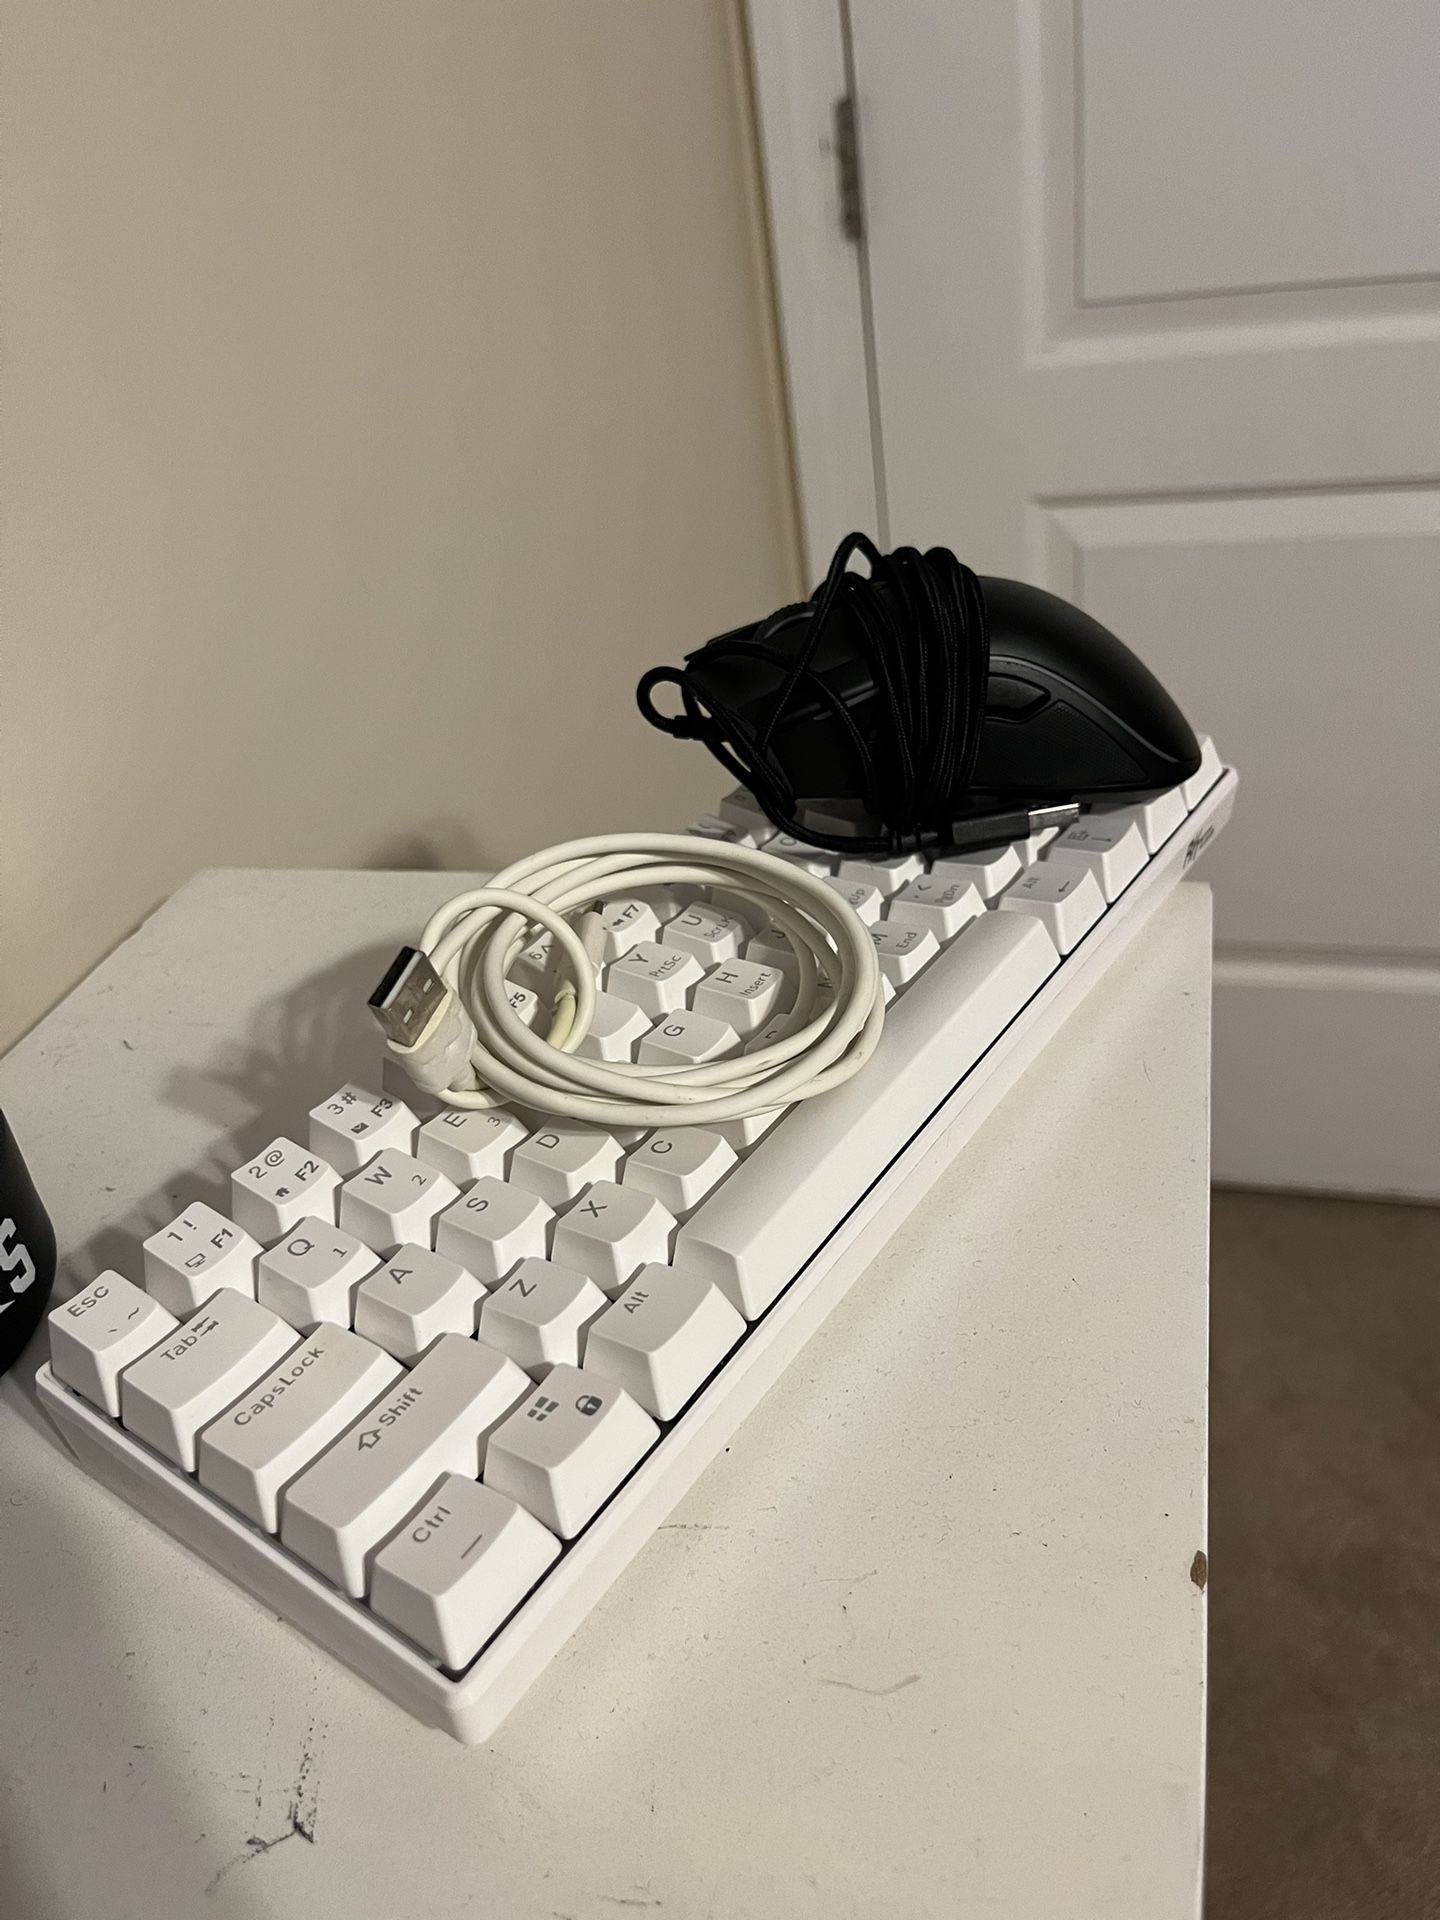 Royal kludge RK61 Keyboard/ Razor Mamba Elite wired mouse